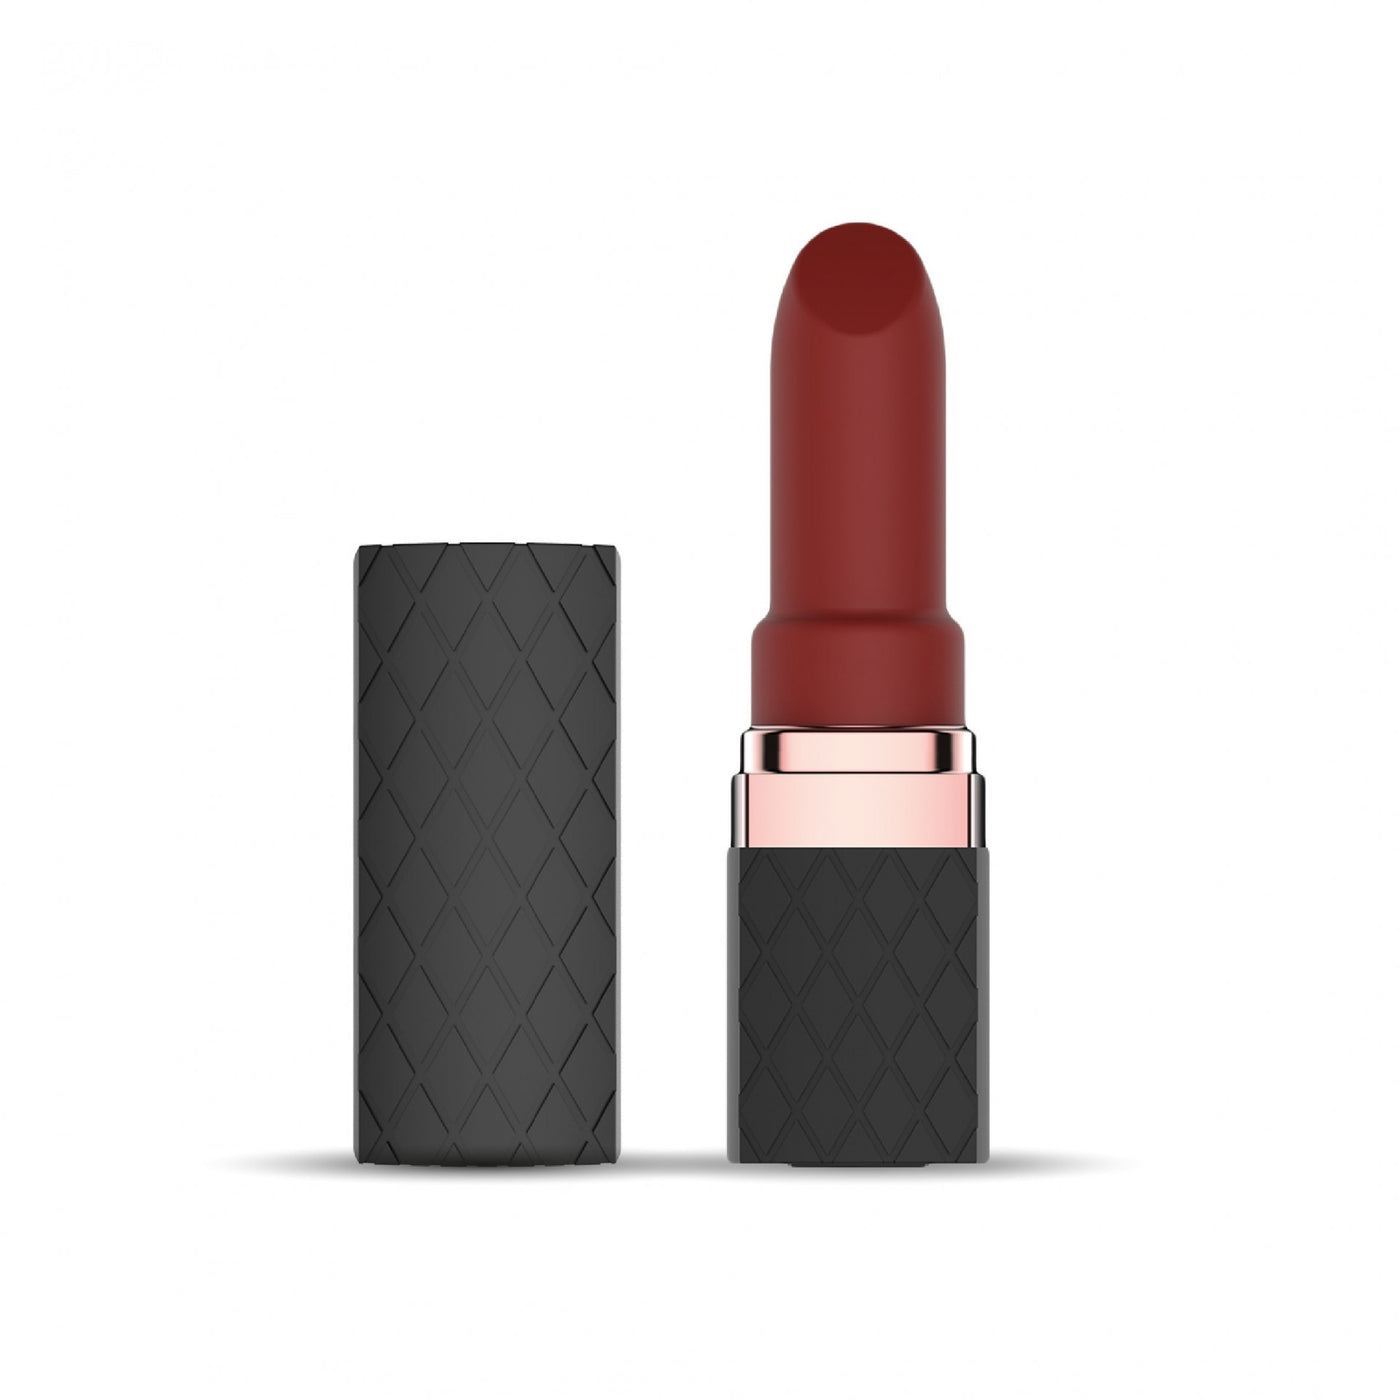 Amour Lipstick Vibrator